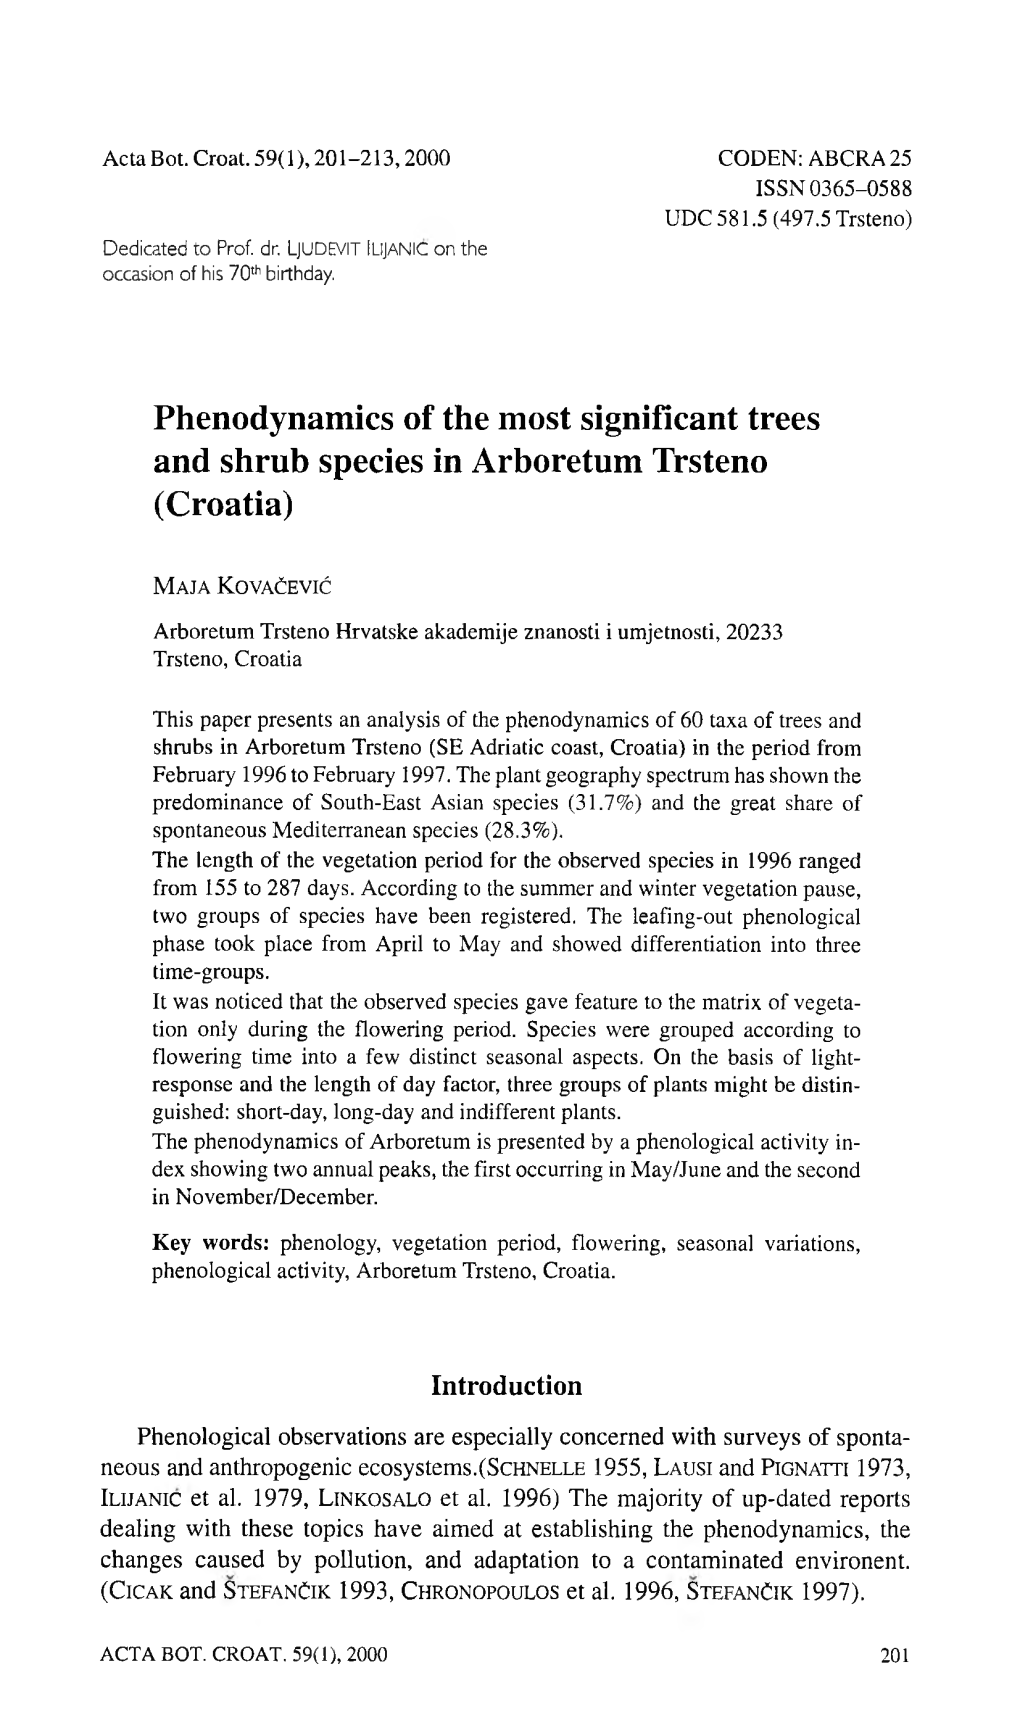 Phenodynamics of the Most Significant Trees and Shrub Species in Arboretum Trsteno (Croatia)